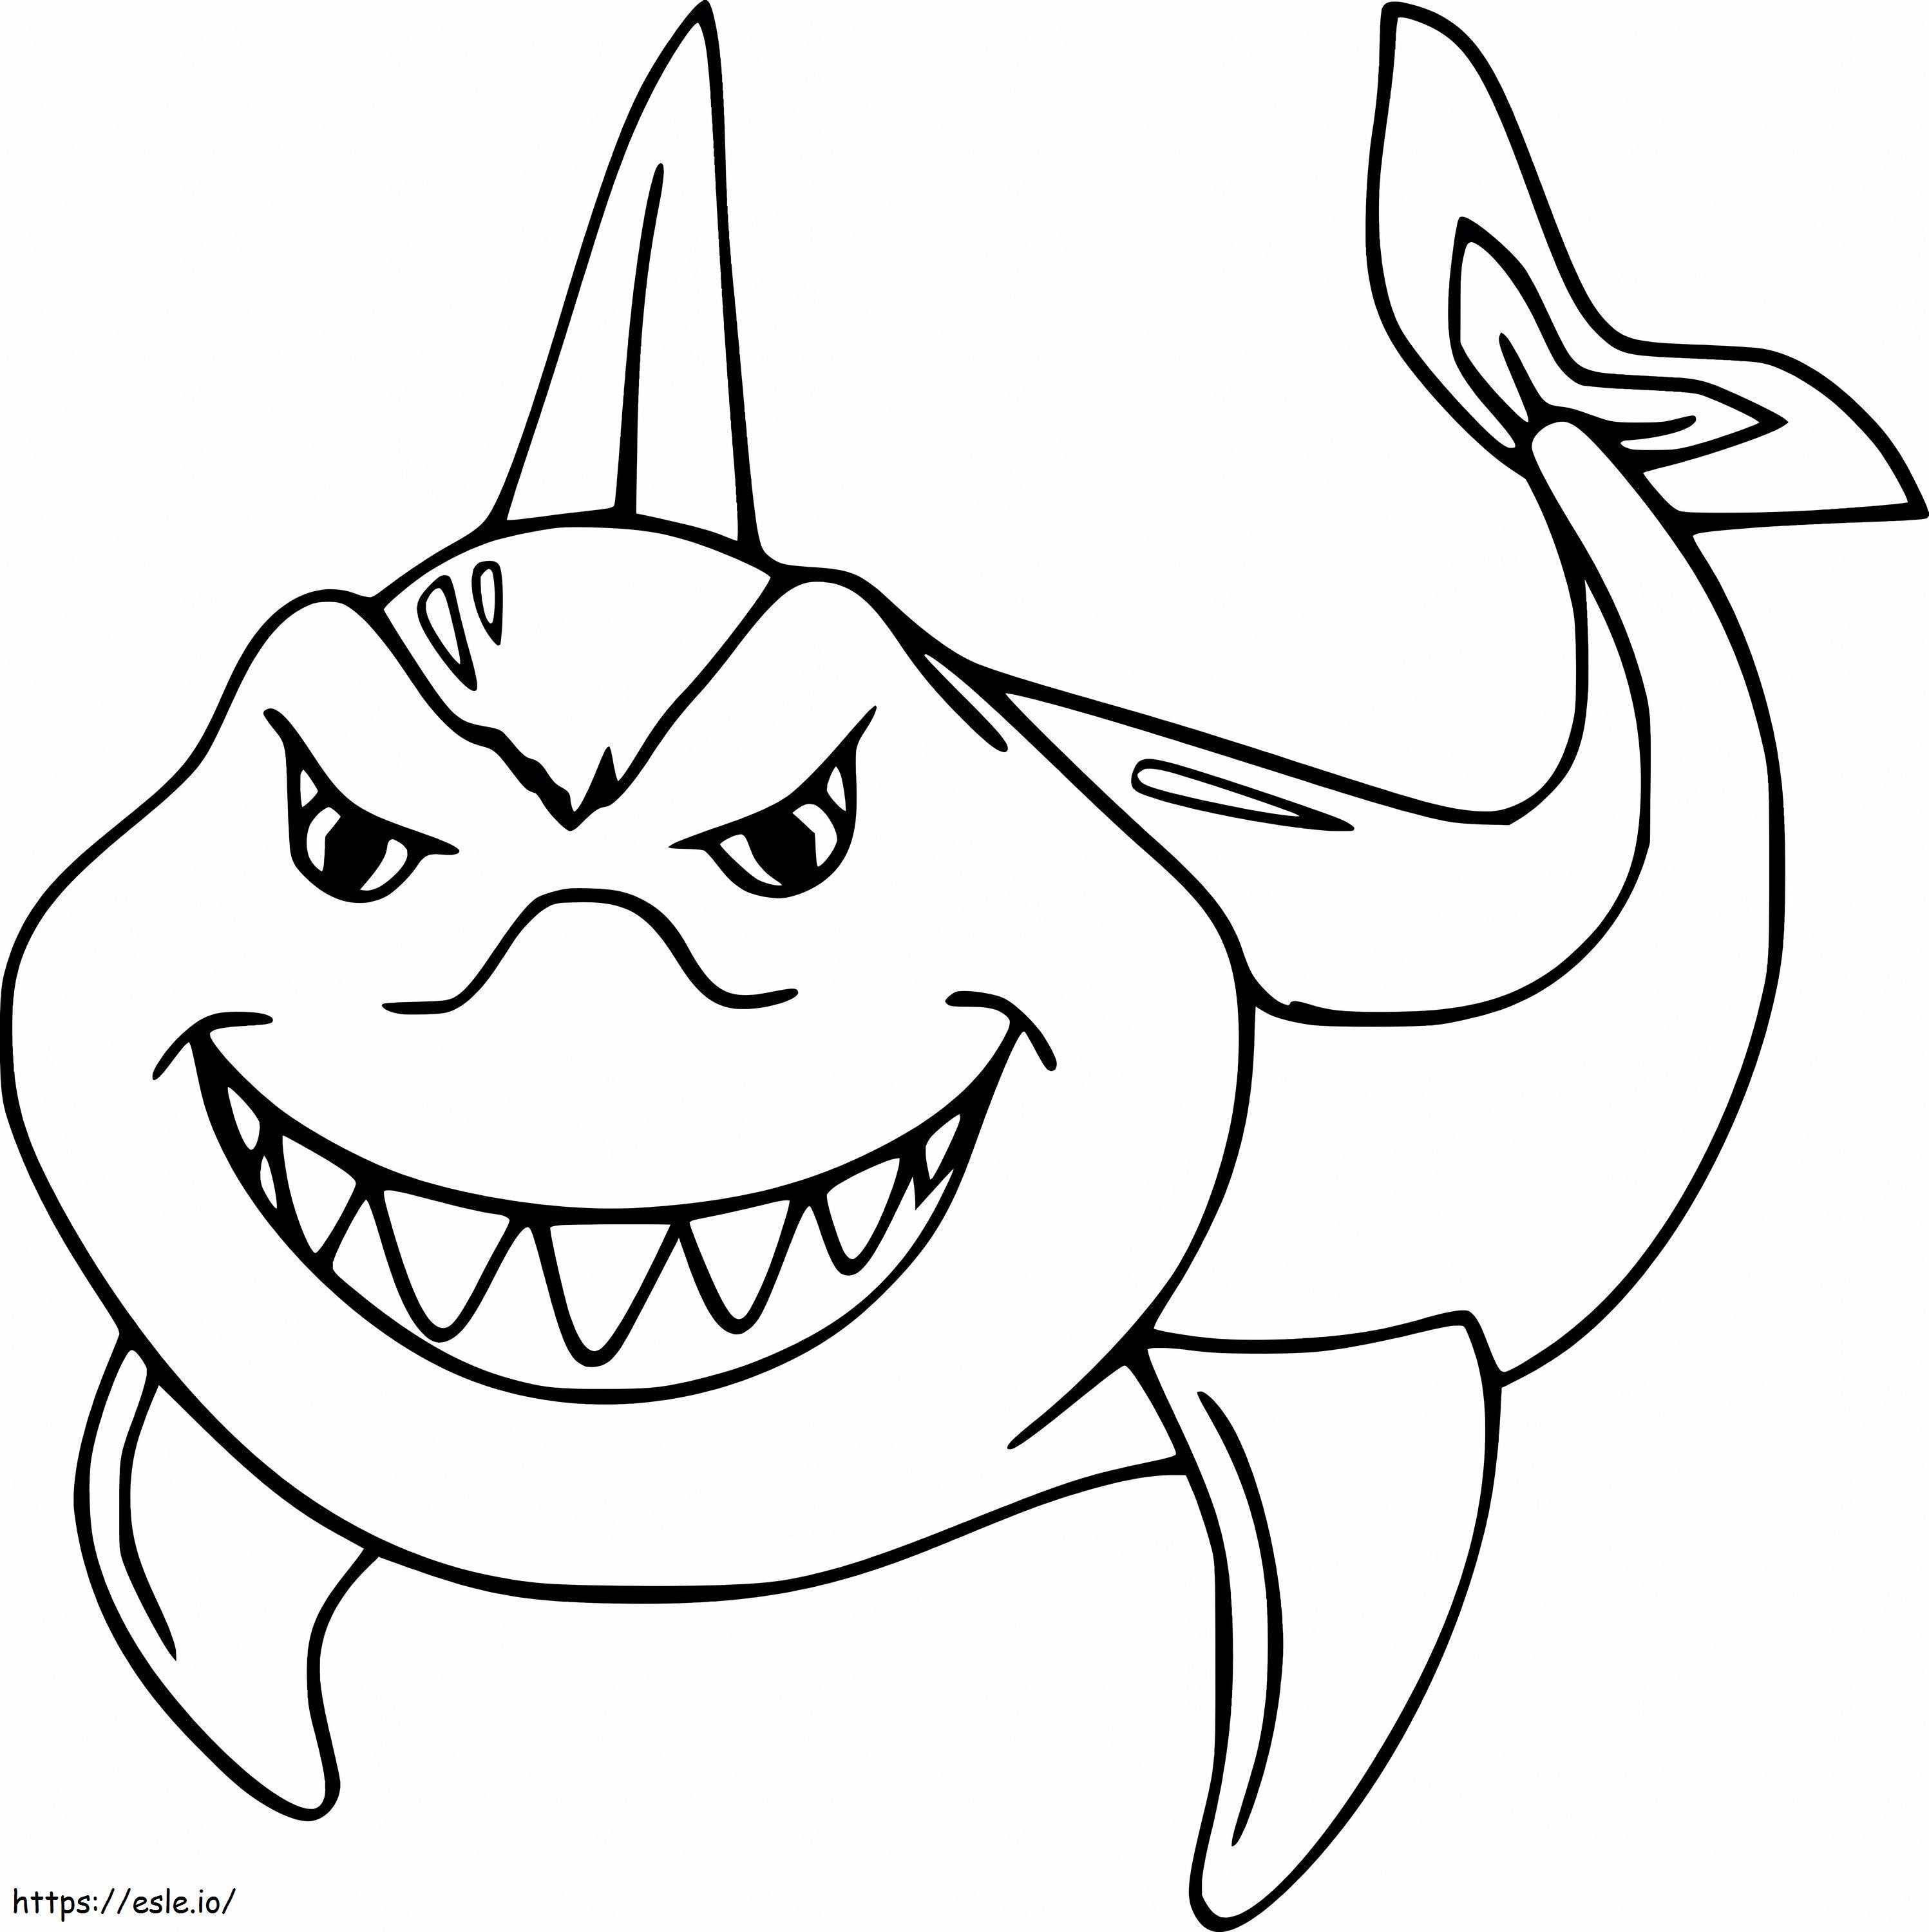 Coloriage Tiburon Mako à imprimer dessin